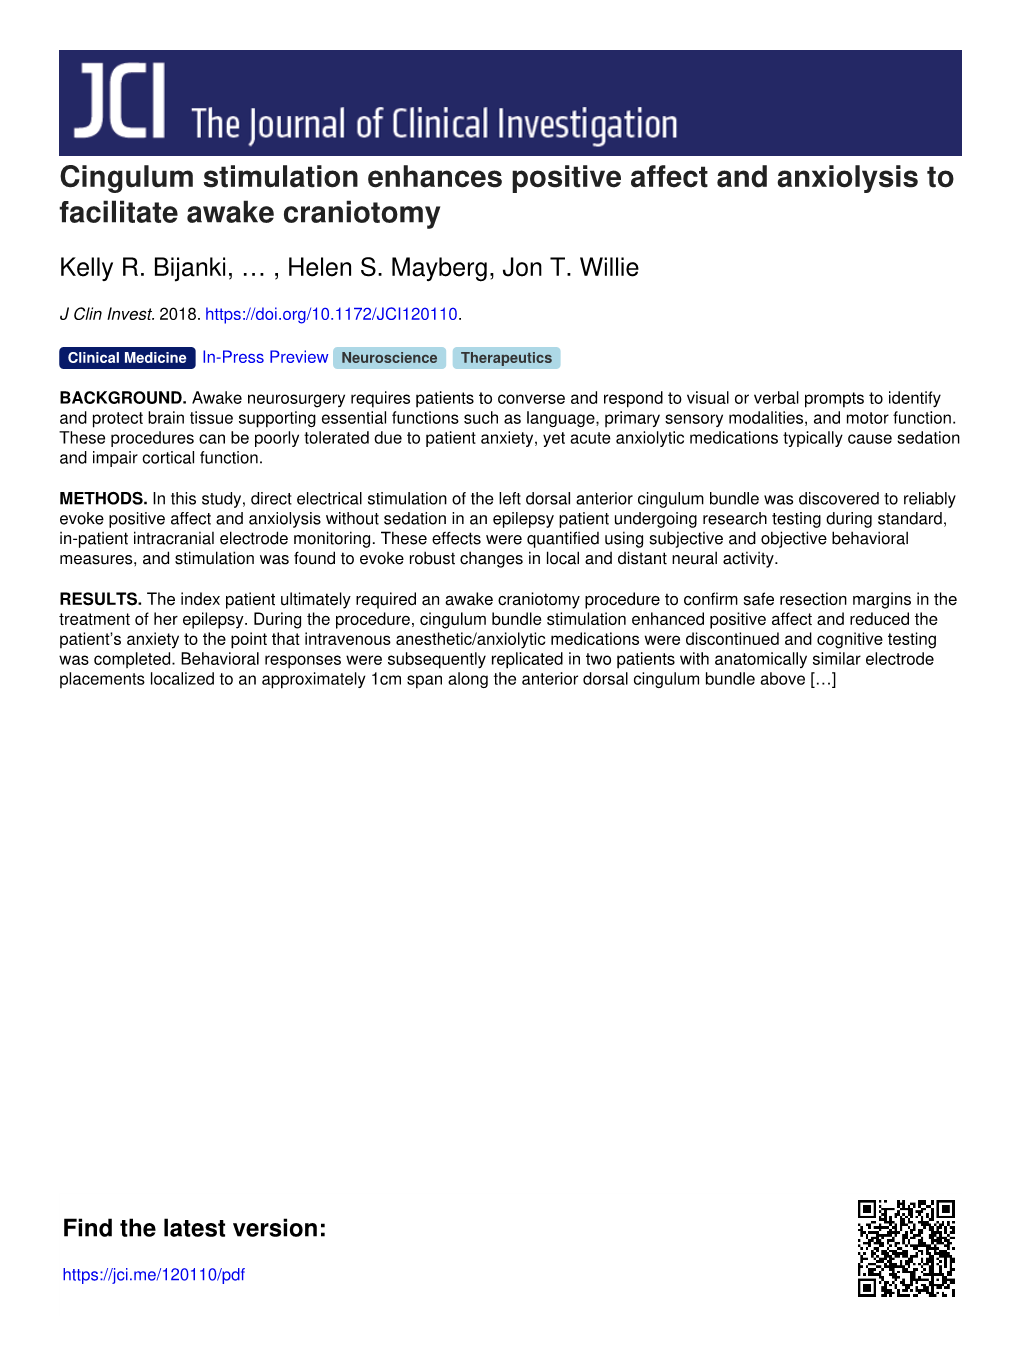 Cingulum Stimulation Enhances Positive Affect and Anxiolysis to Facilitate Awake Craniotomy